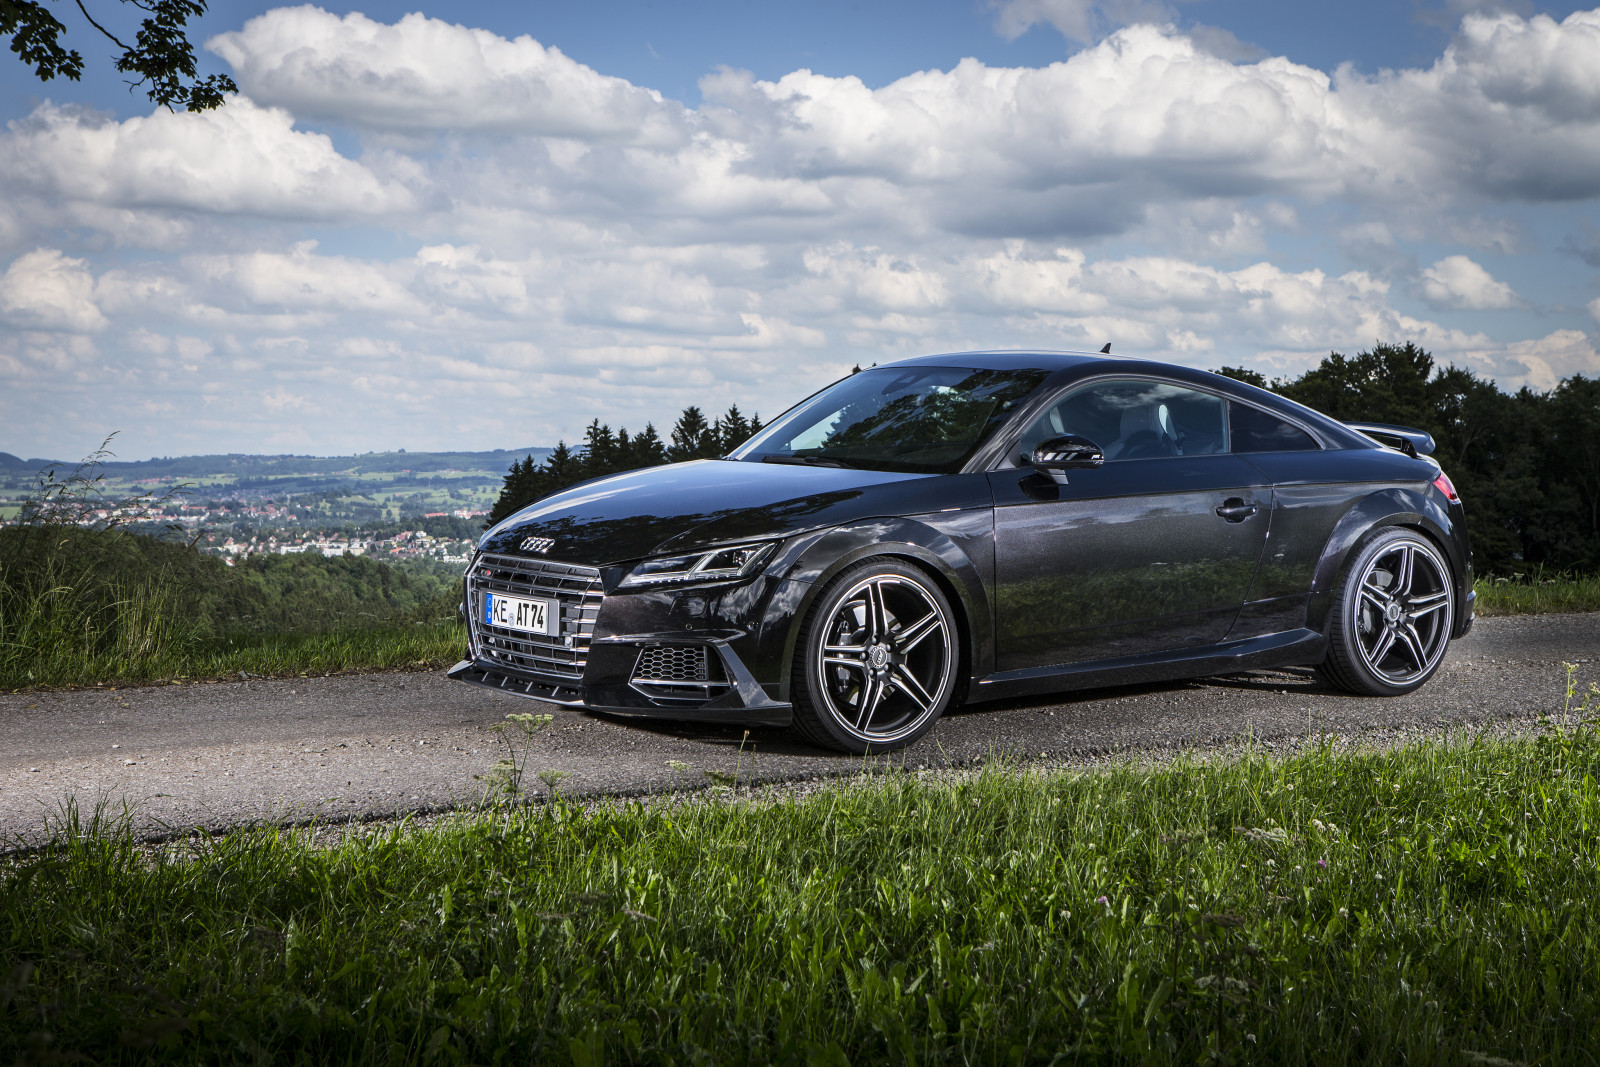 coupe, Audi, ABBOT, 2015, TTS